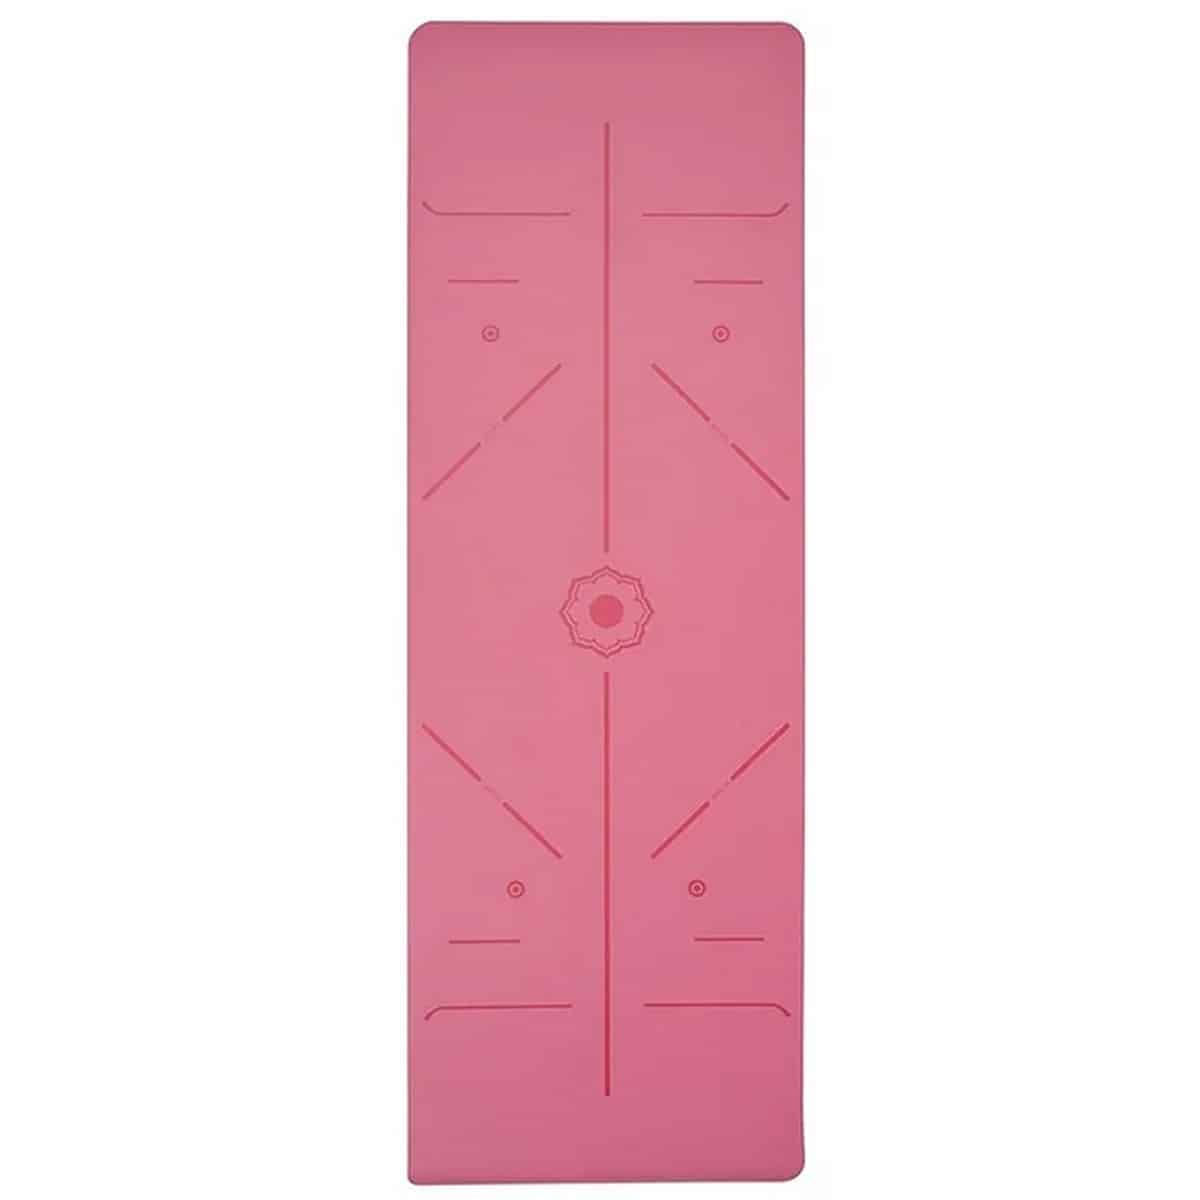 GRAVOLITE PU Rubber Pink Plain Yoga Mats 24X72 Inches (5mm)